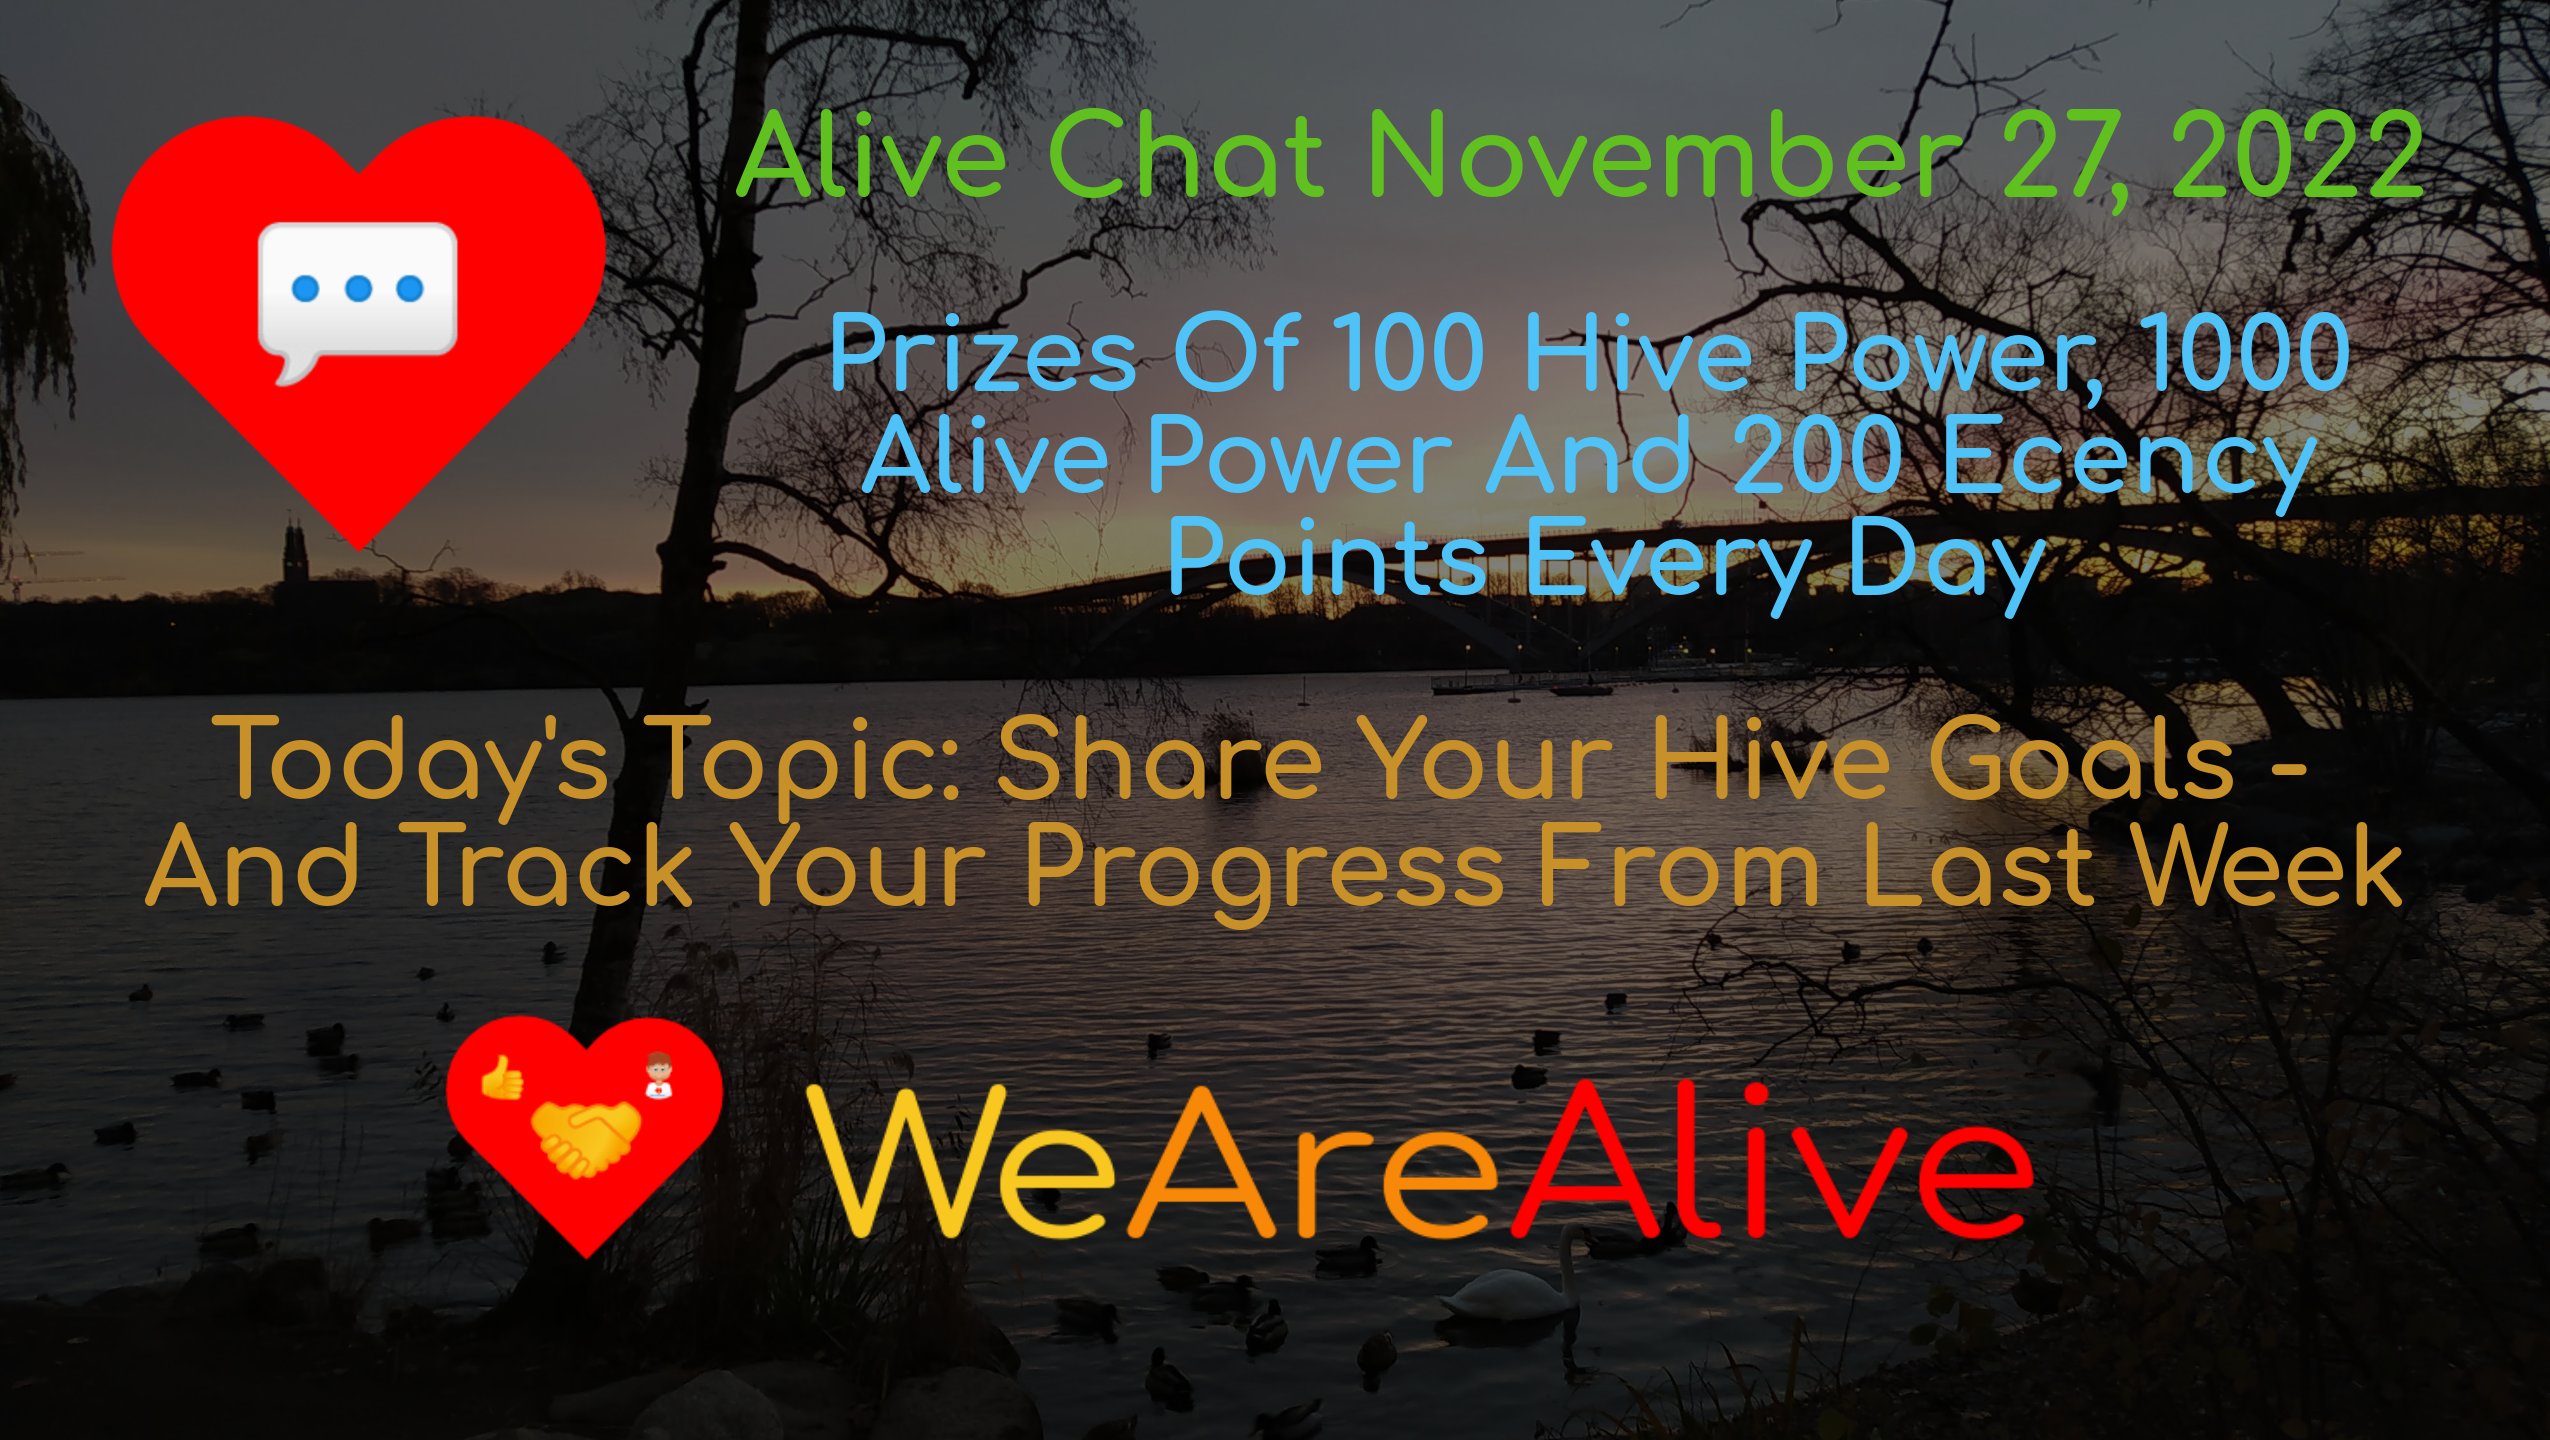 @alive.chat/alive-chat-november-27-2022